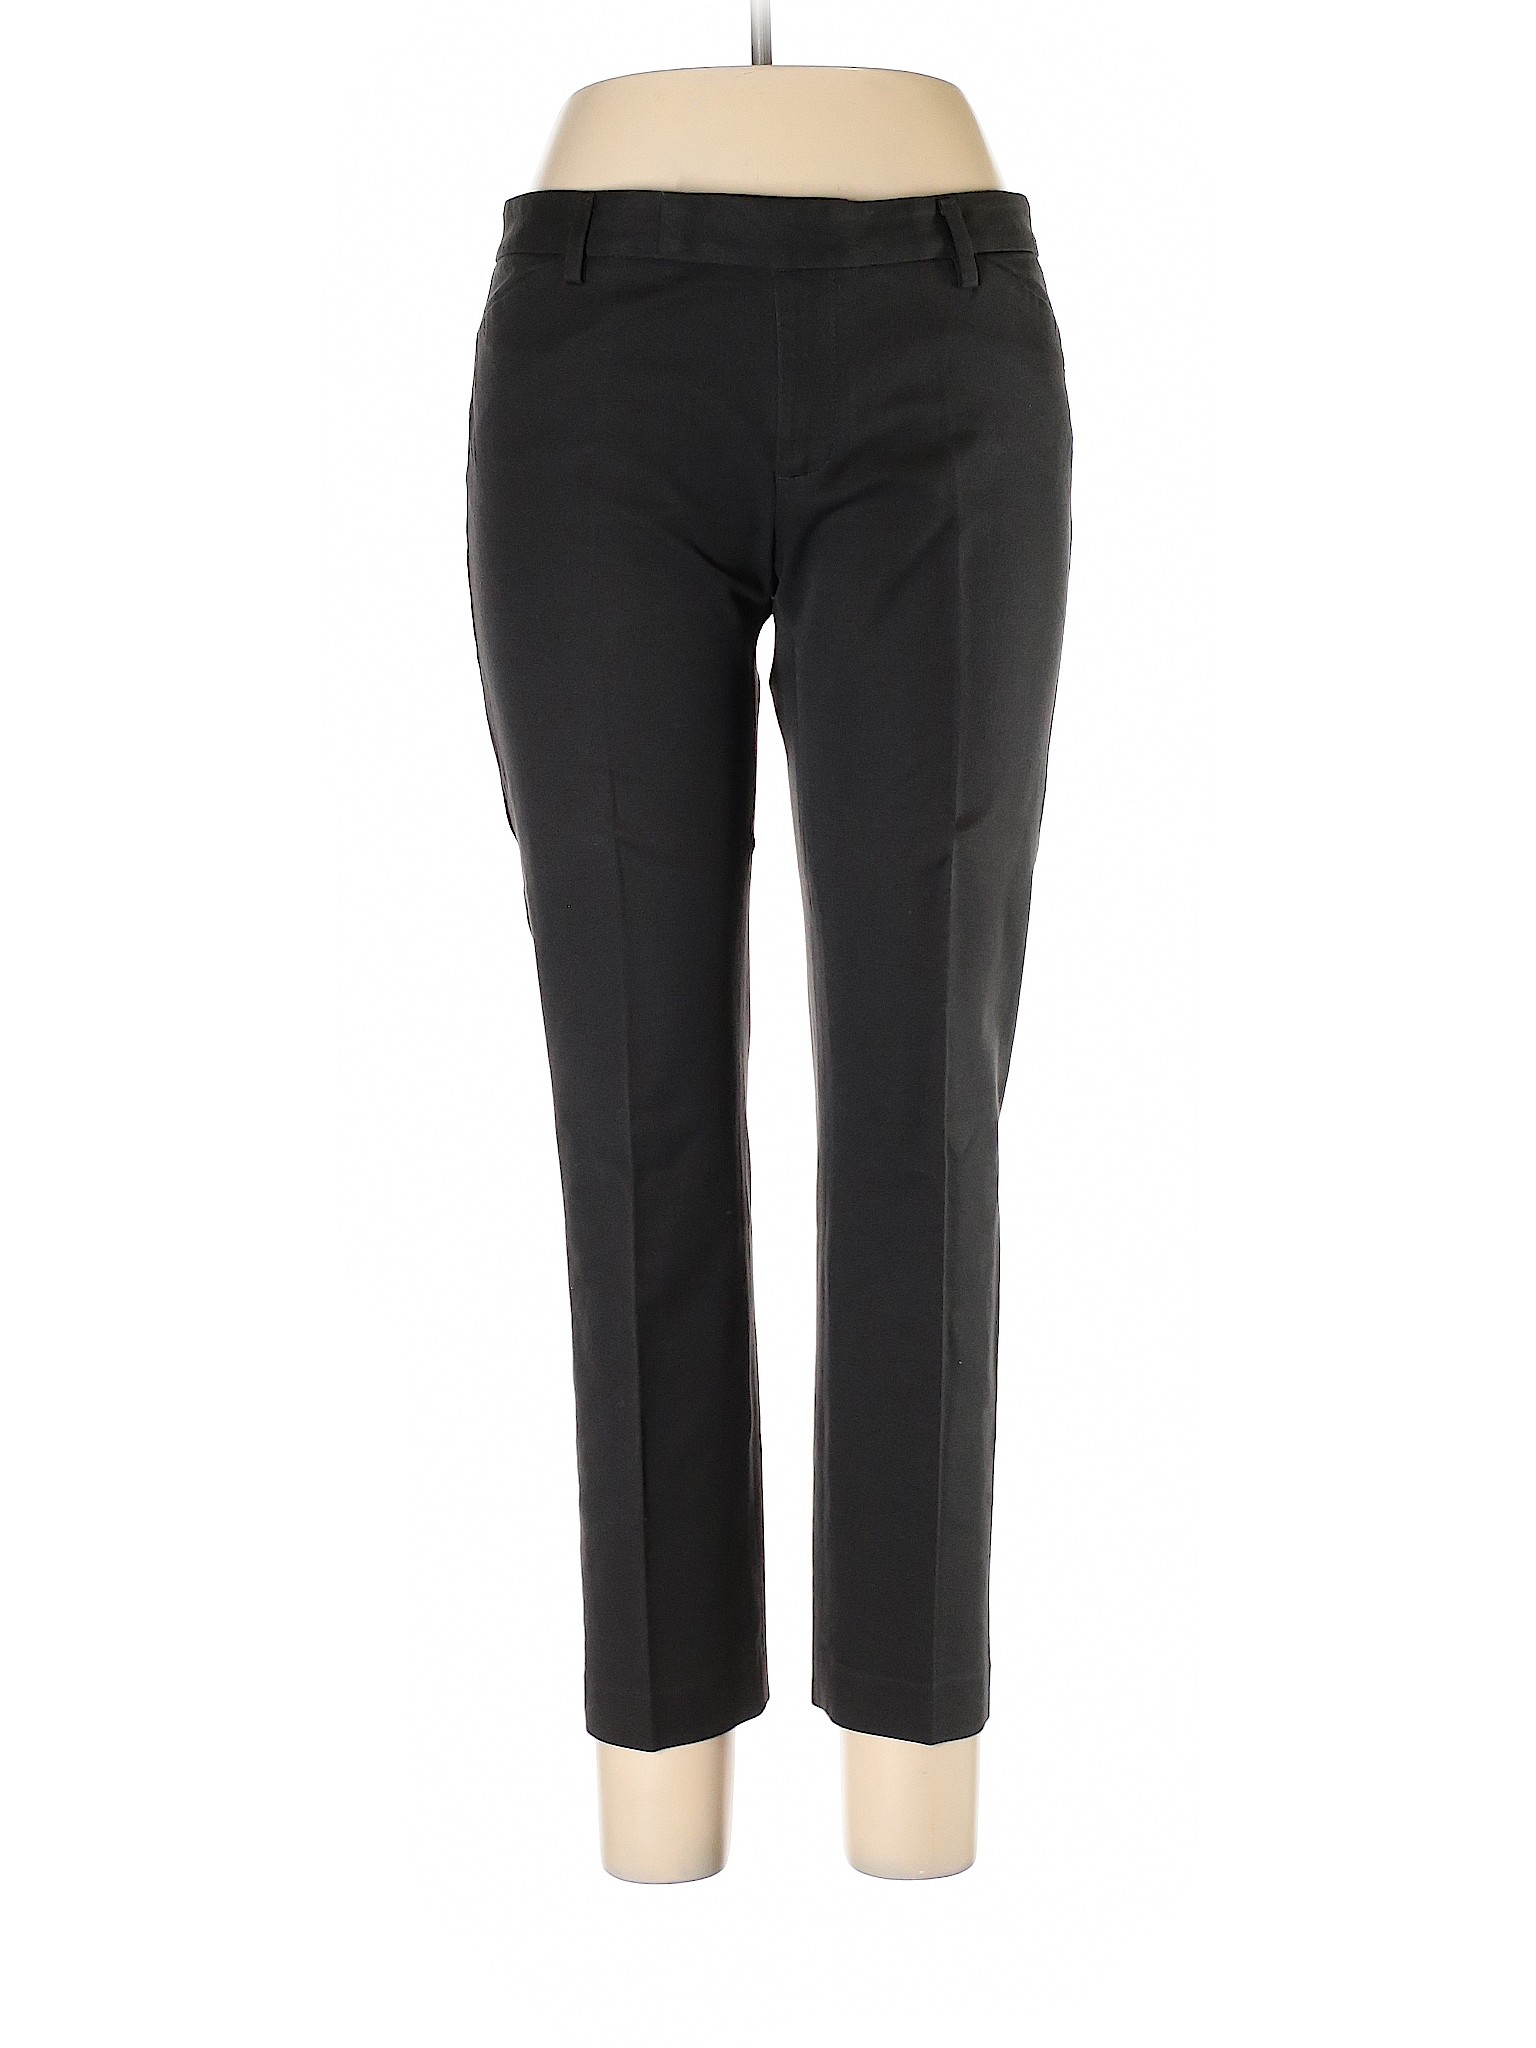 Gap Women Black Casual Pants 10 | eBay